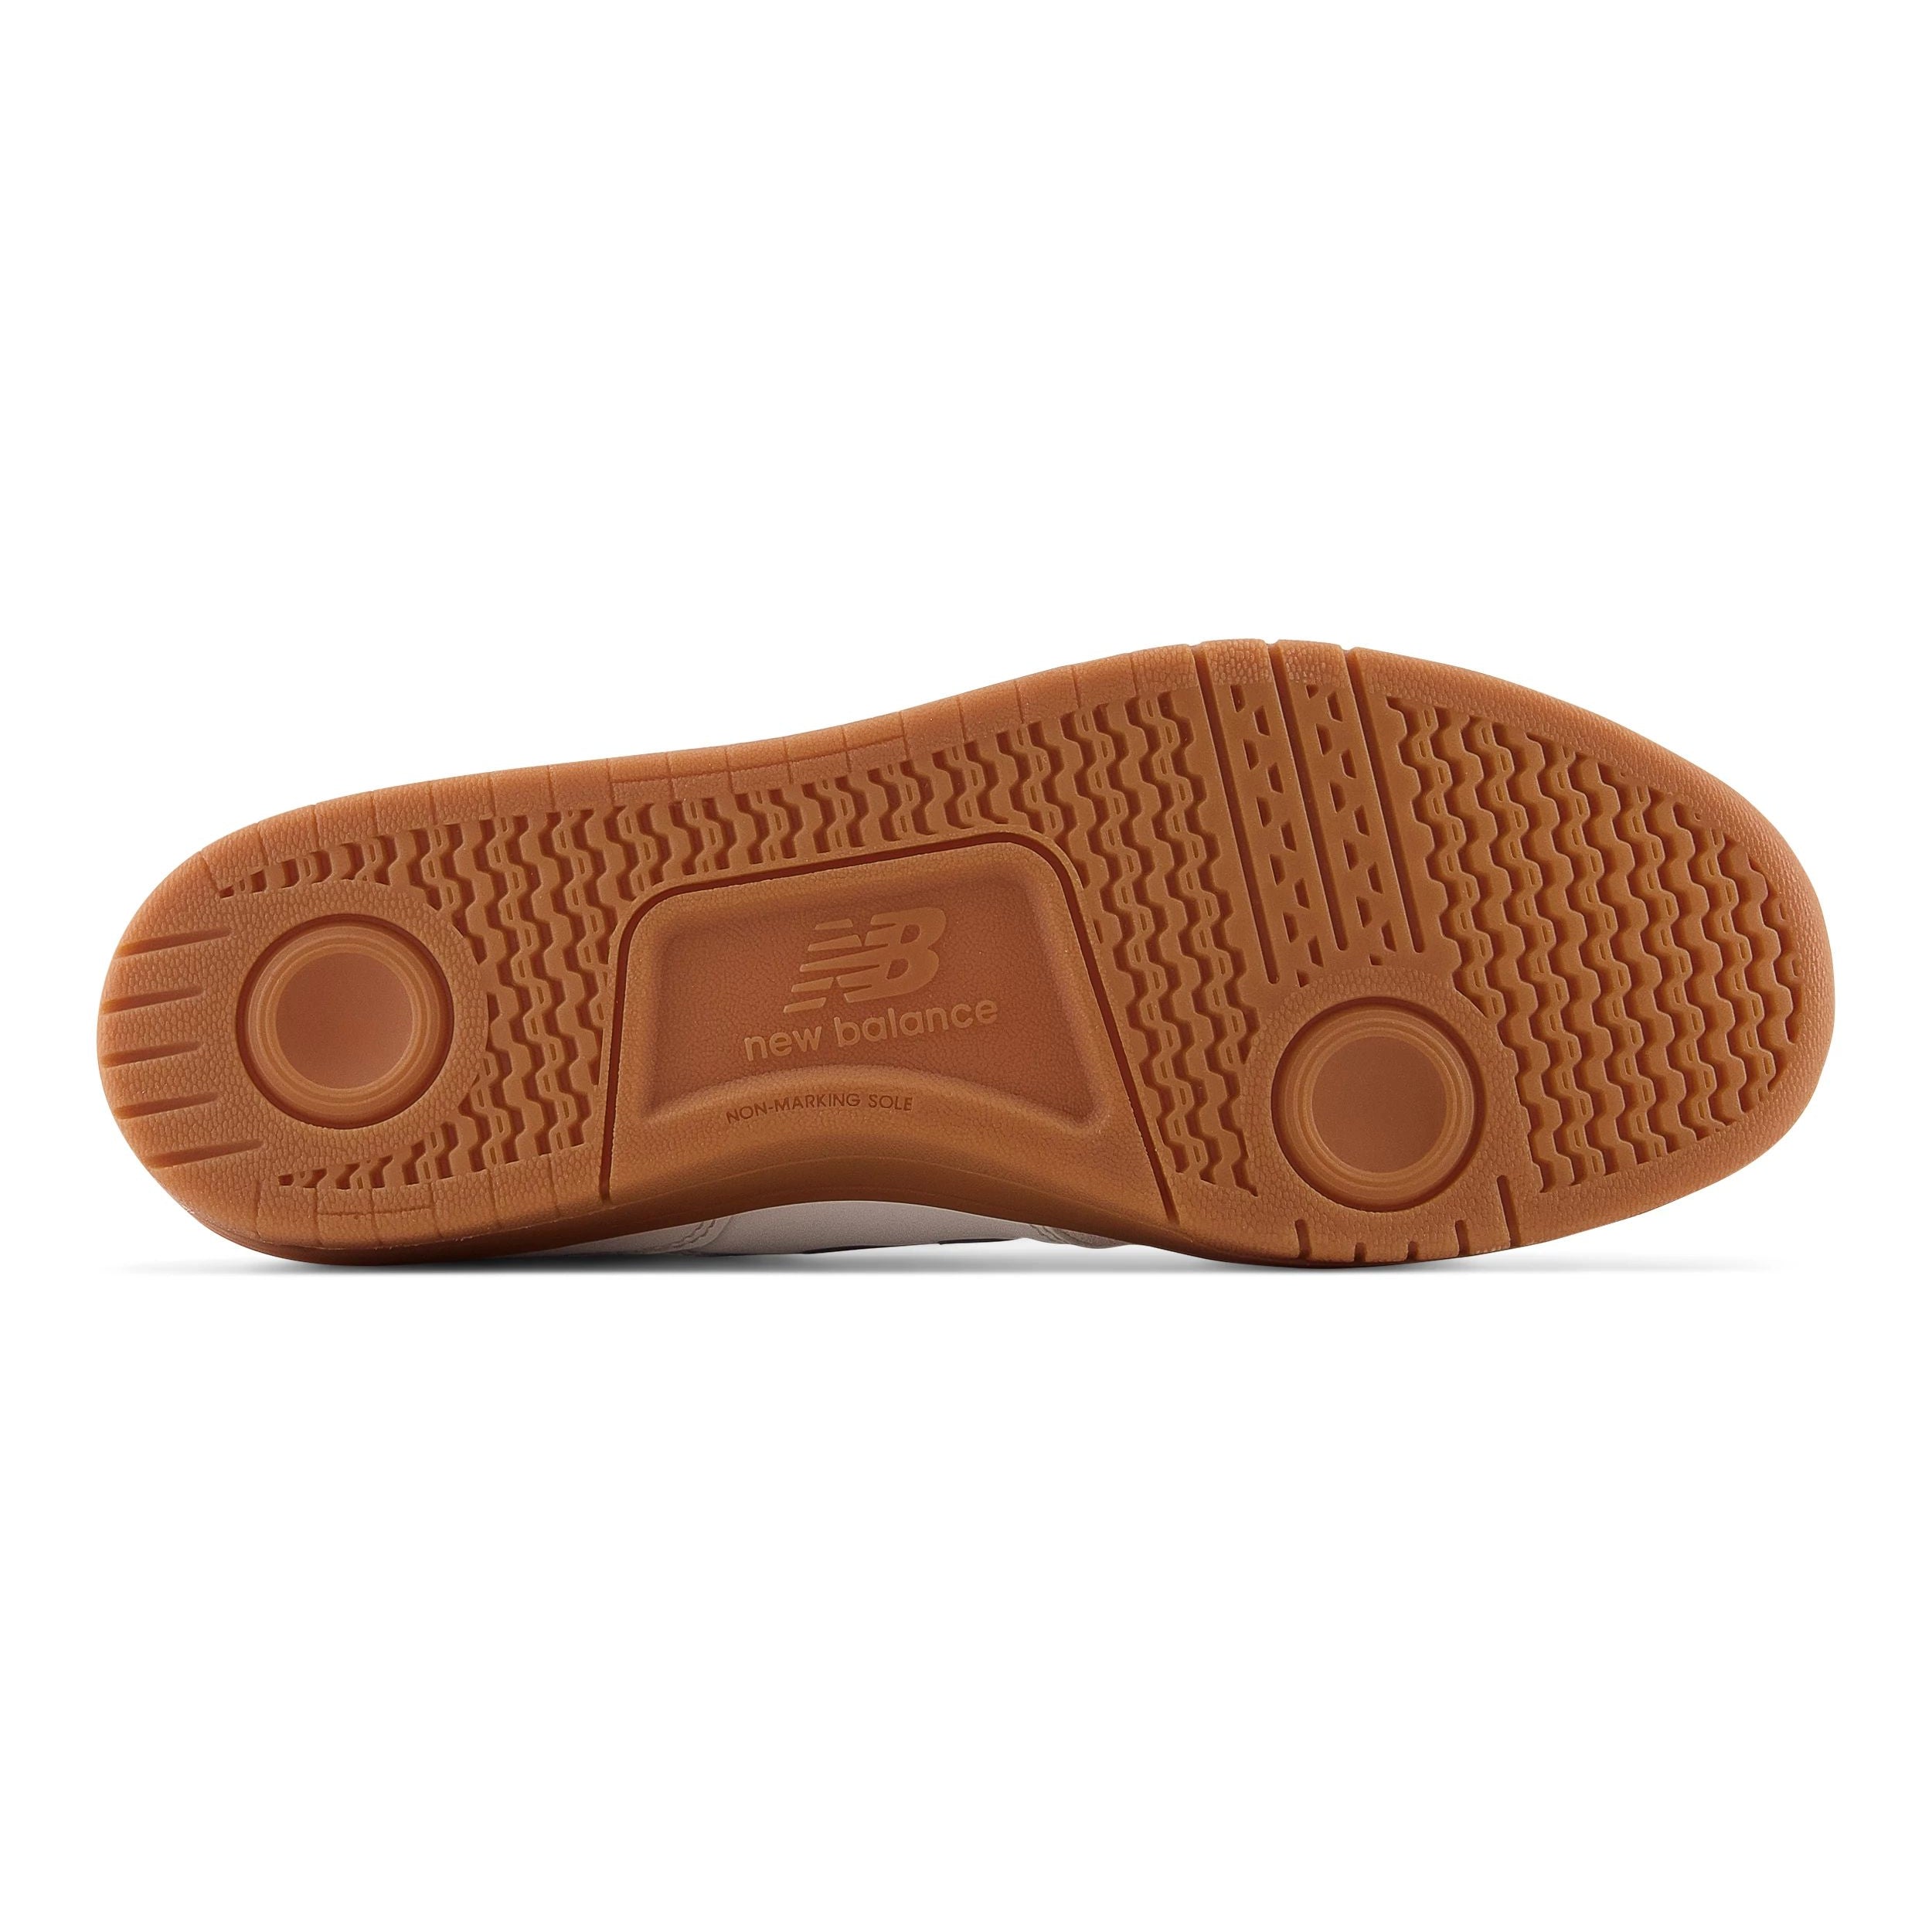 White/Gum NM425 NB Numeric Skate Shoe Bottom